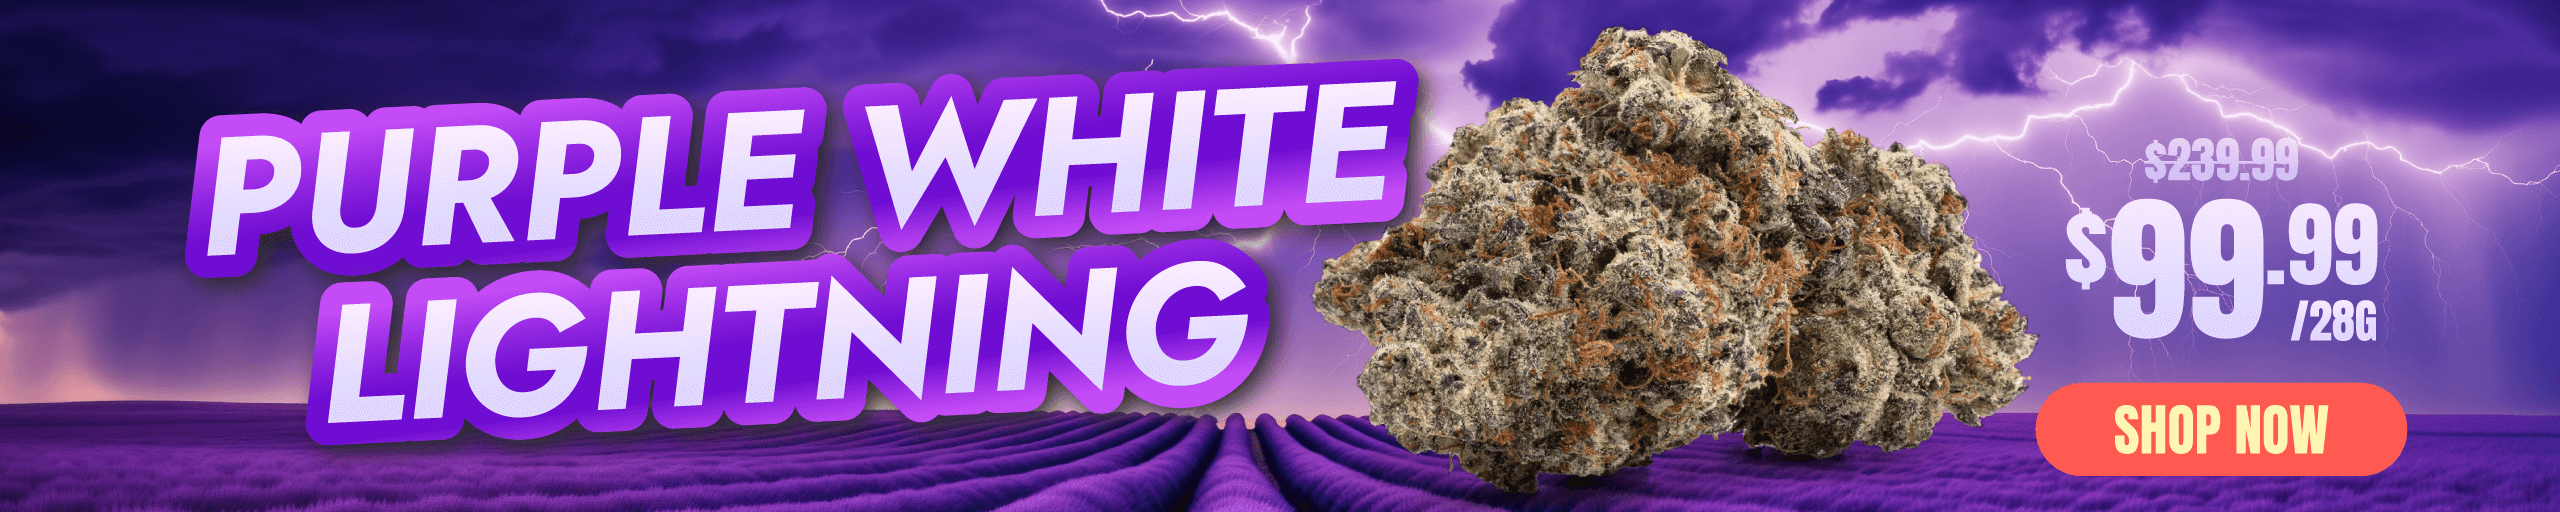 Purple White Lightning Web